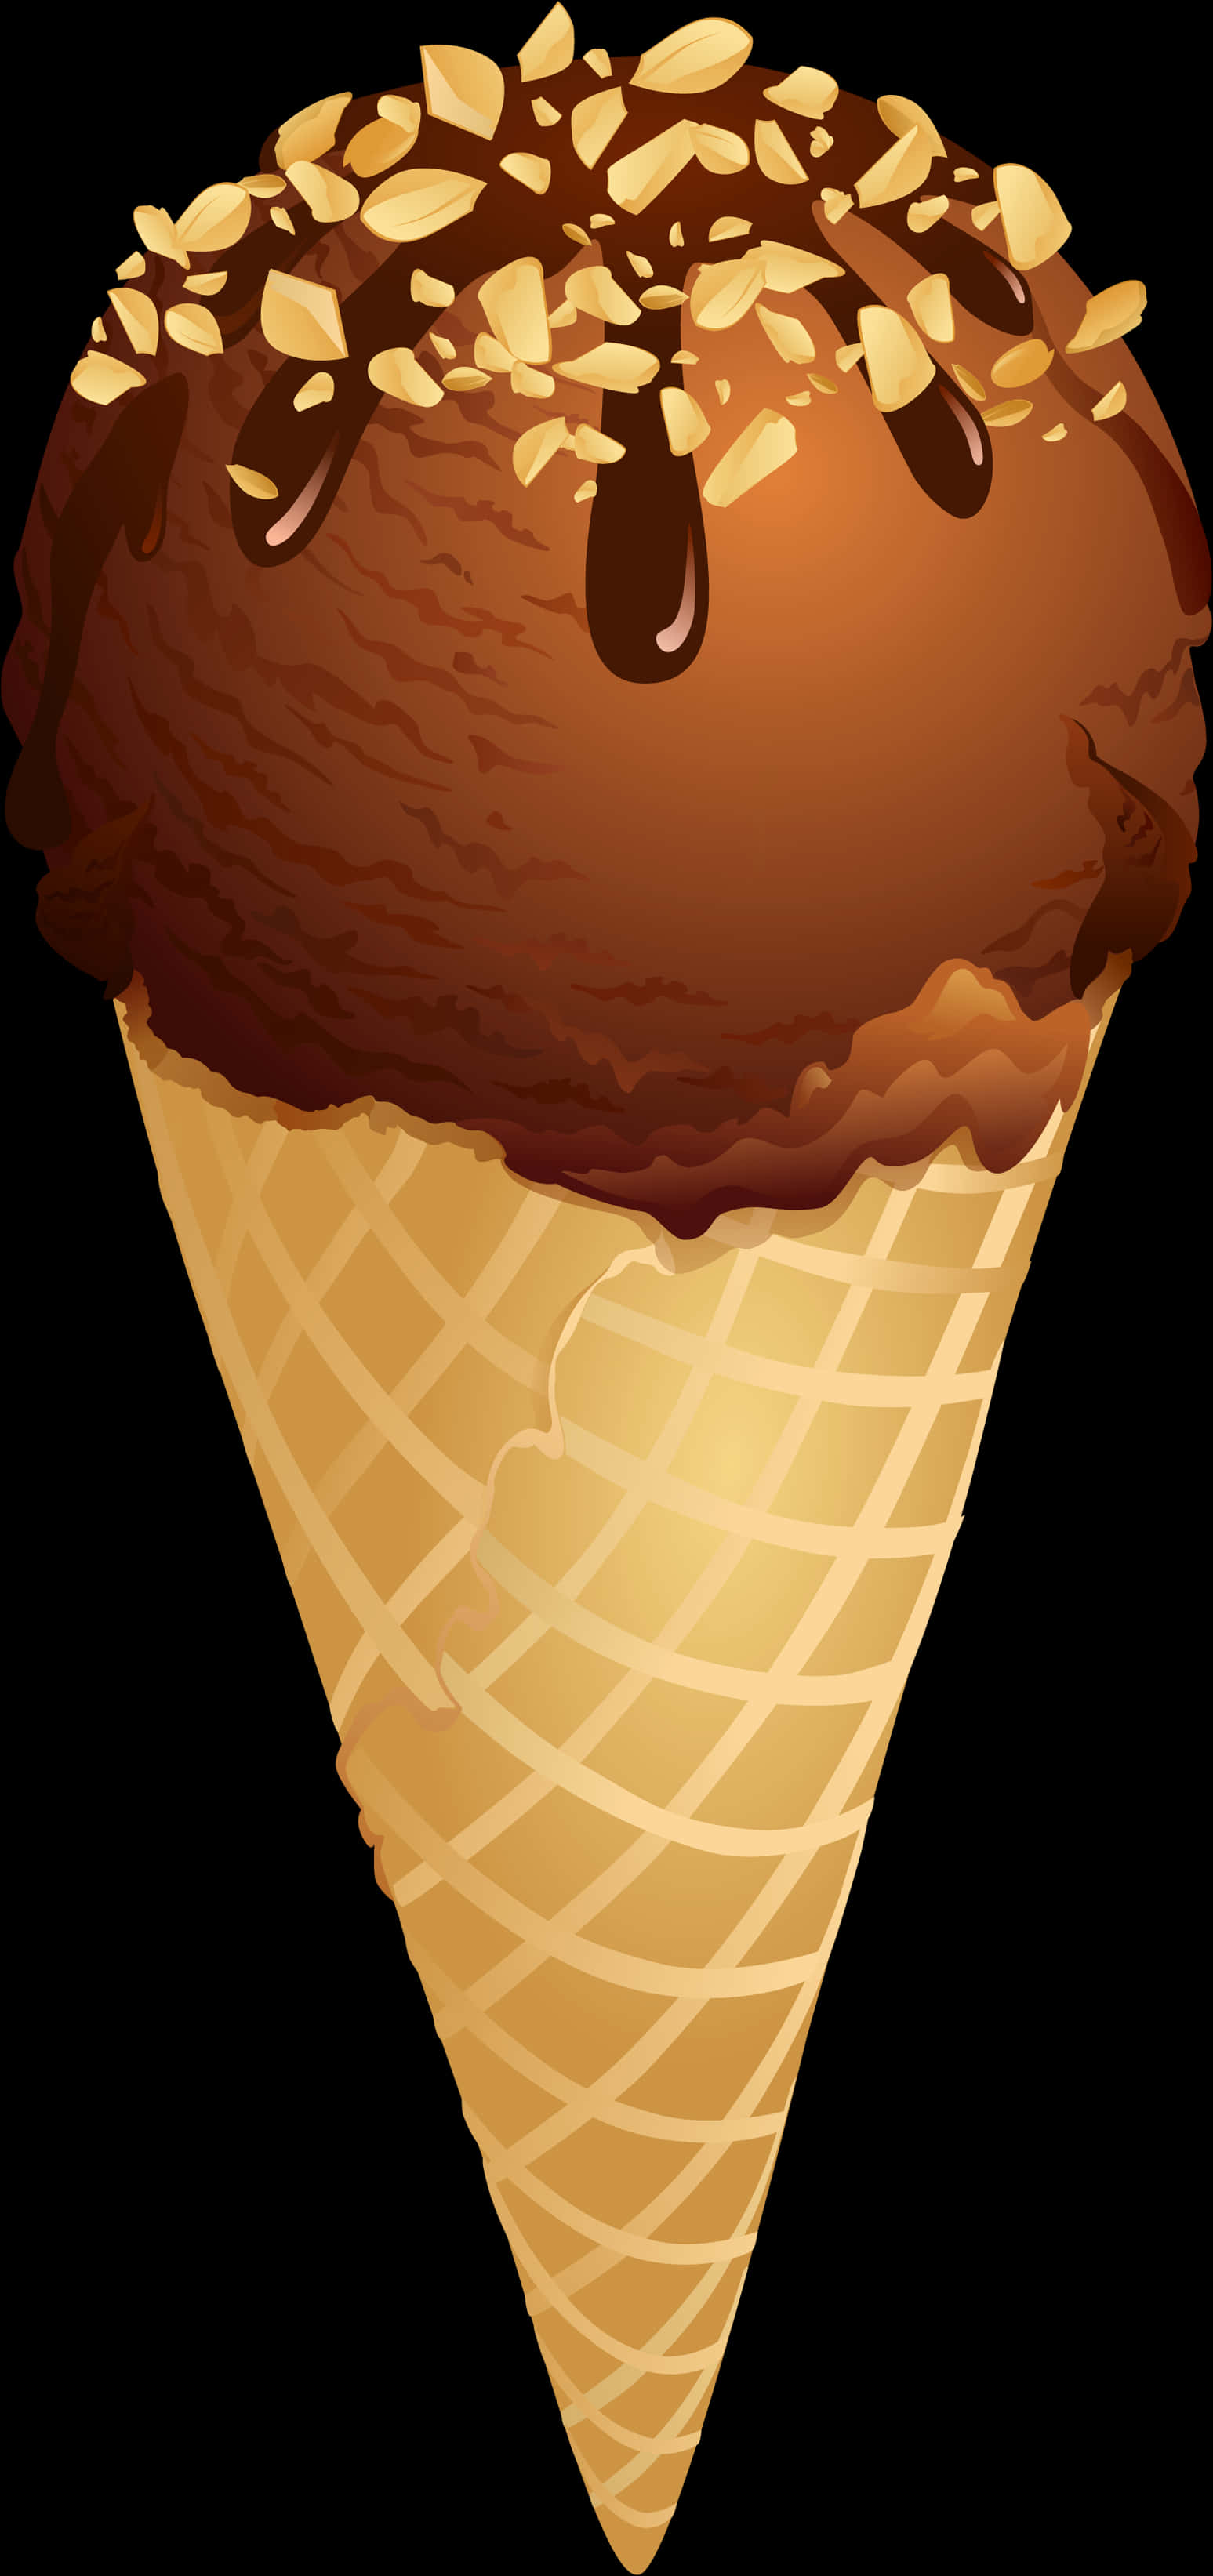 A Chocolate Ice Cream Cone